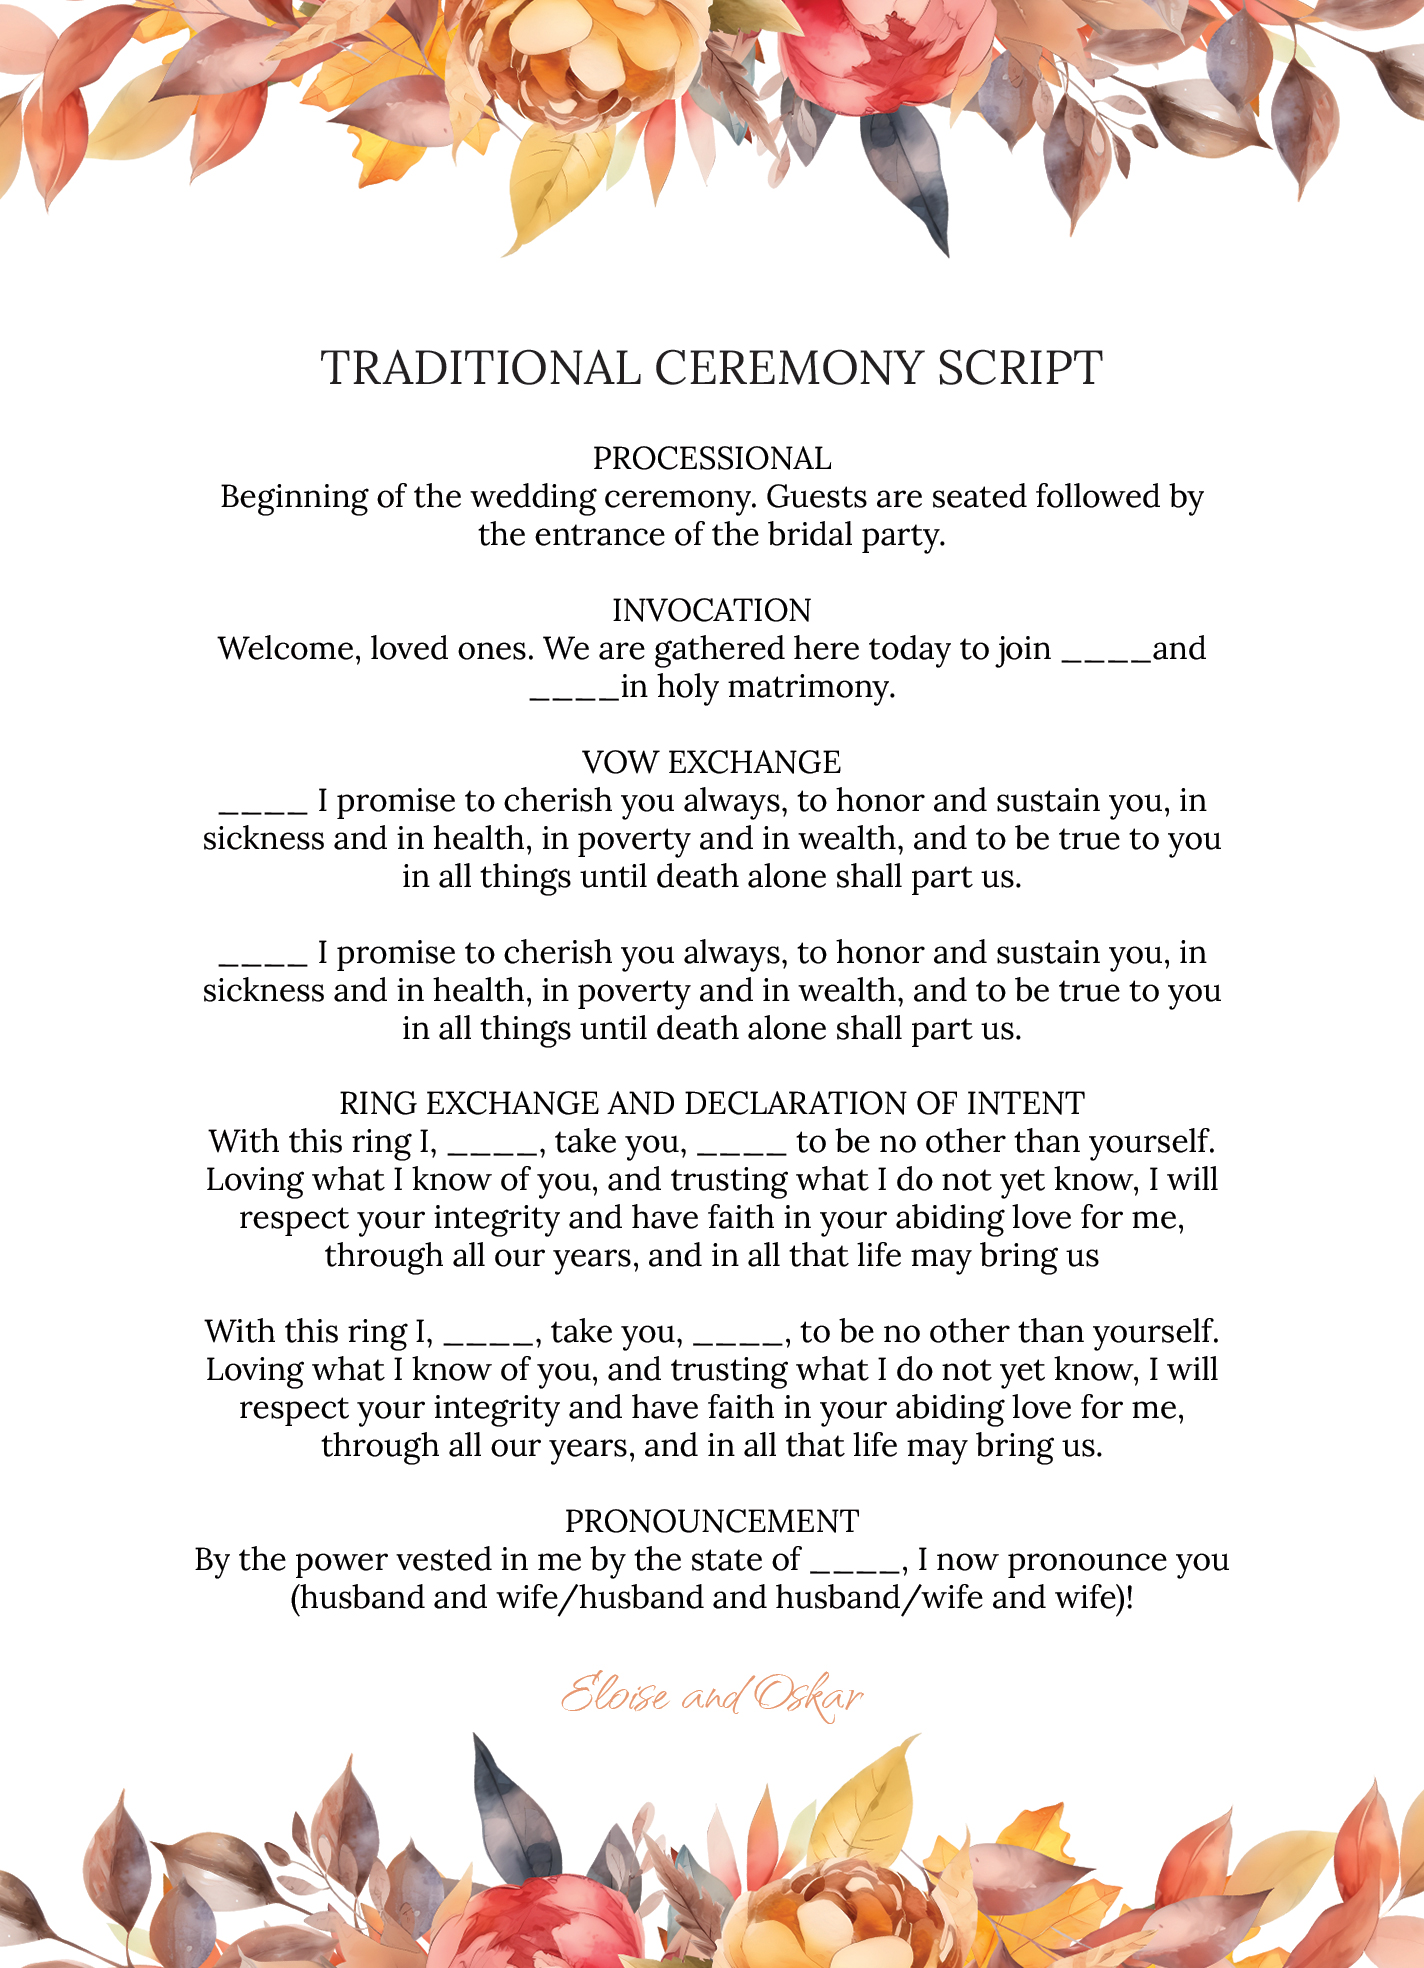 Autumn Wedding Ceremony Script Free Google Docs Template - gdoc.io